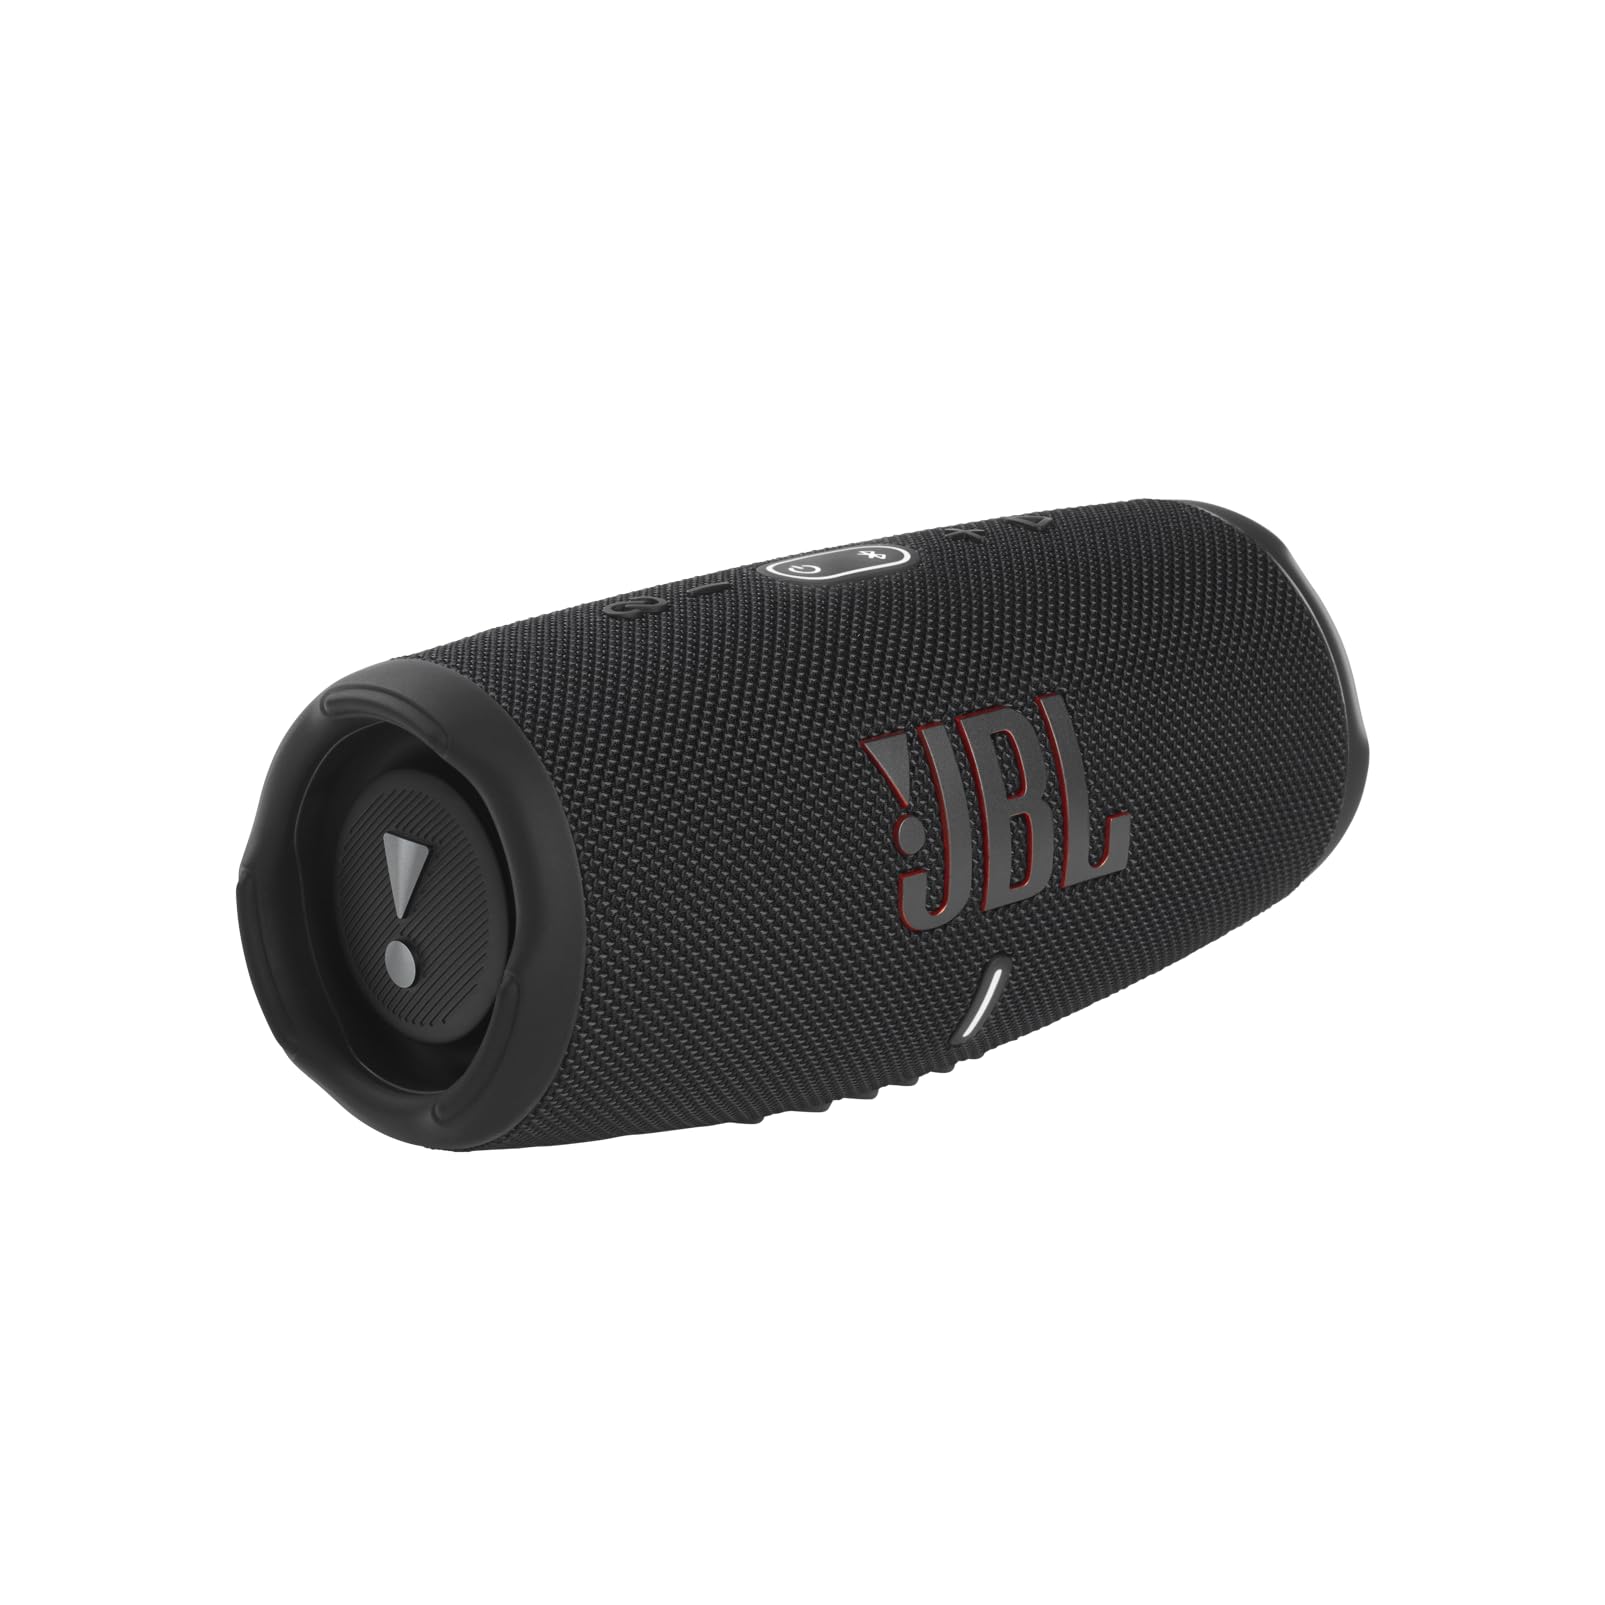 JBL Charge 5 Portable Wireless Bluetooth Speaker $129.95